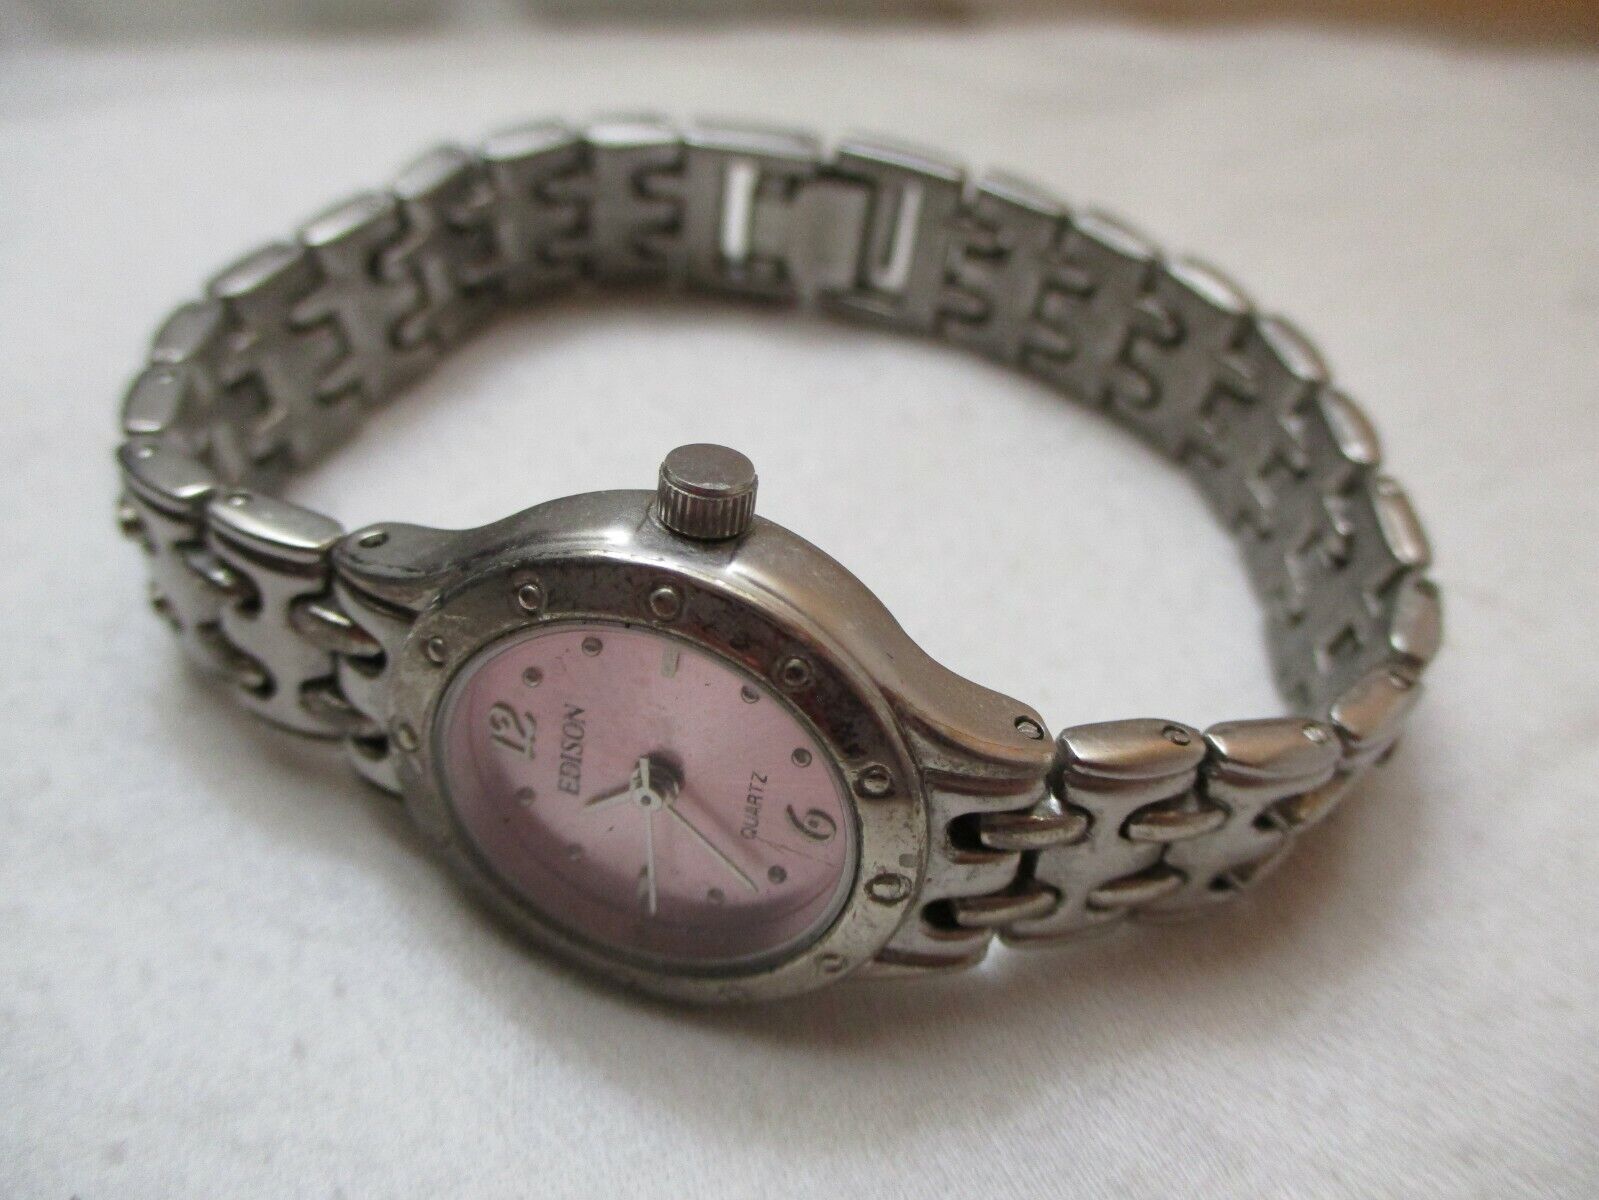 Edison Analog Wristwatch with Quartz Movement